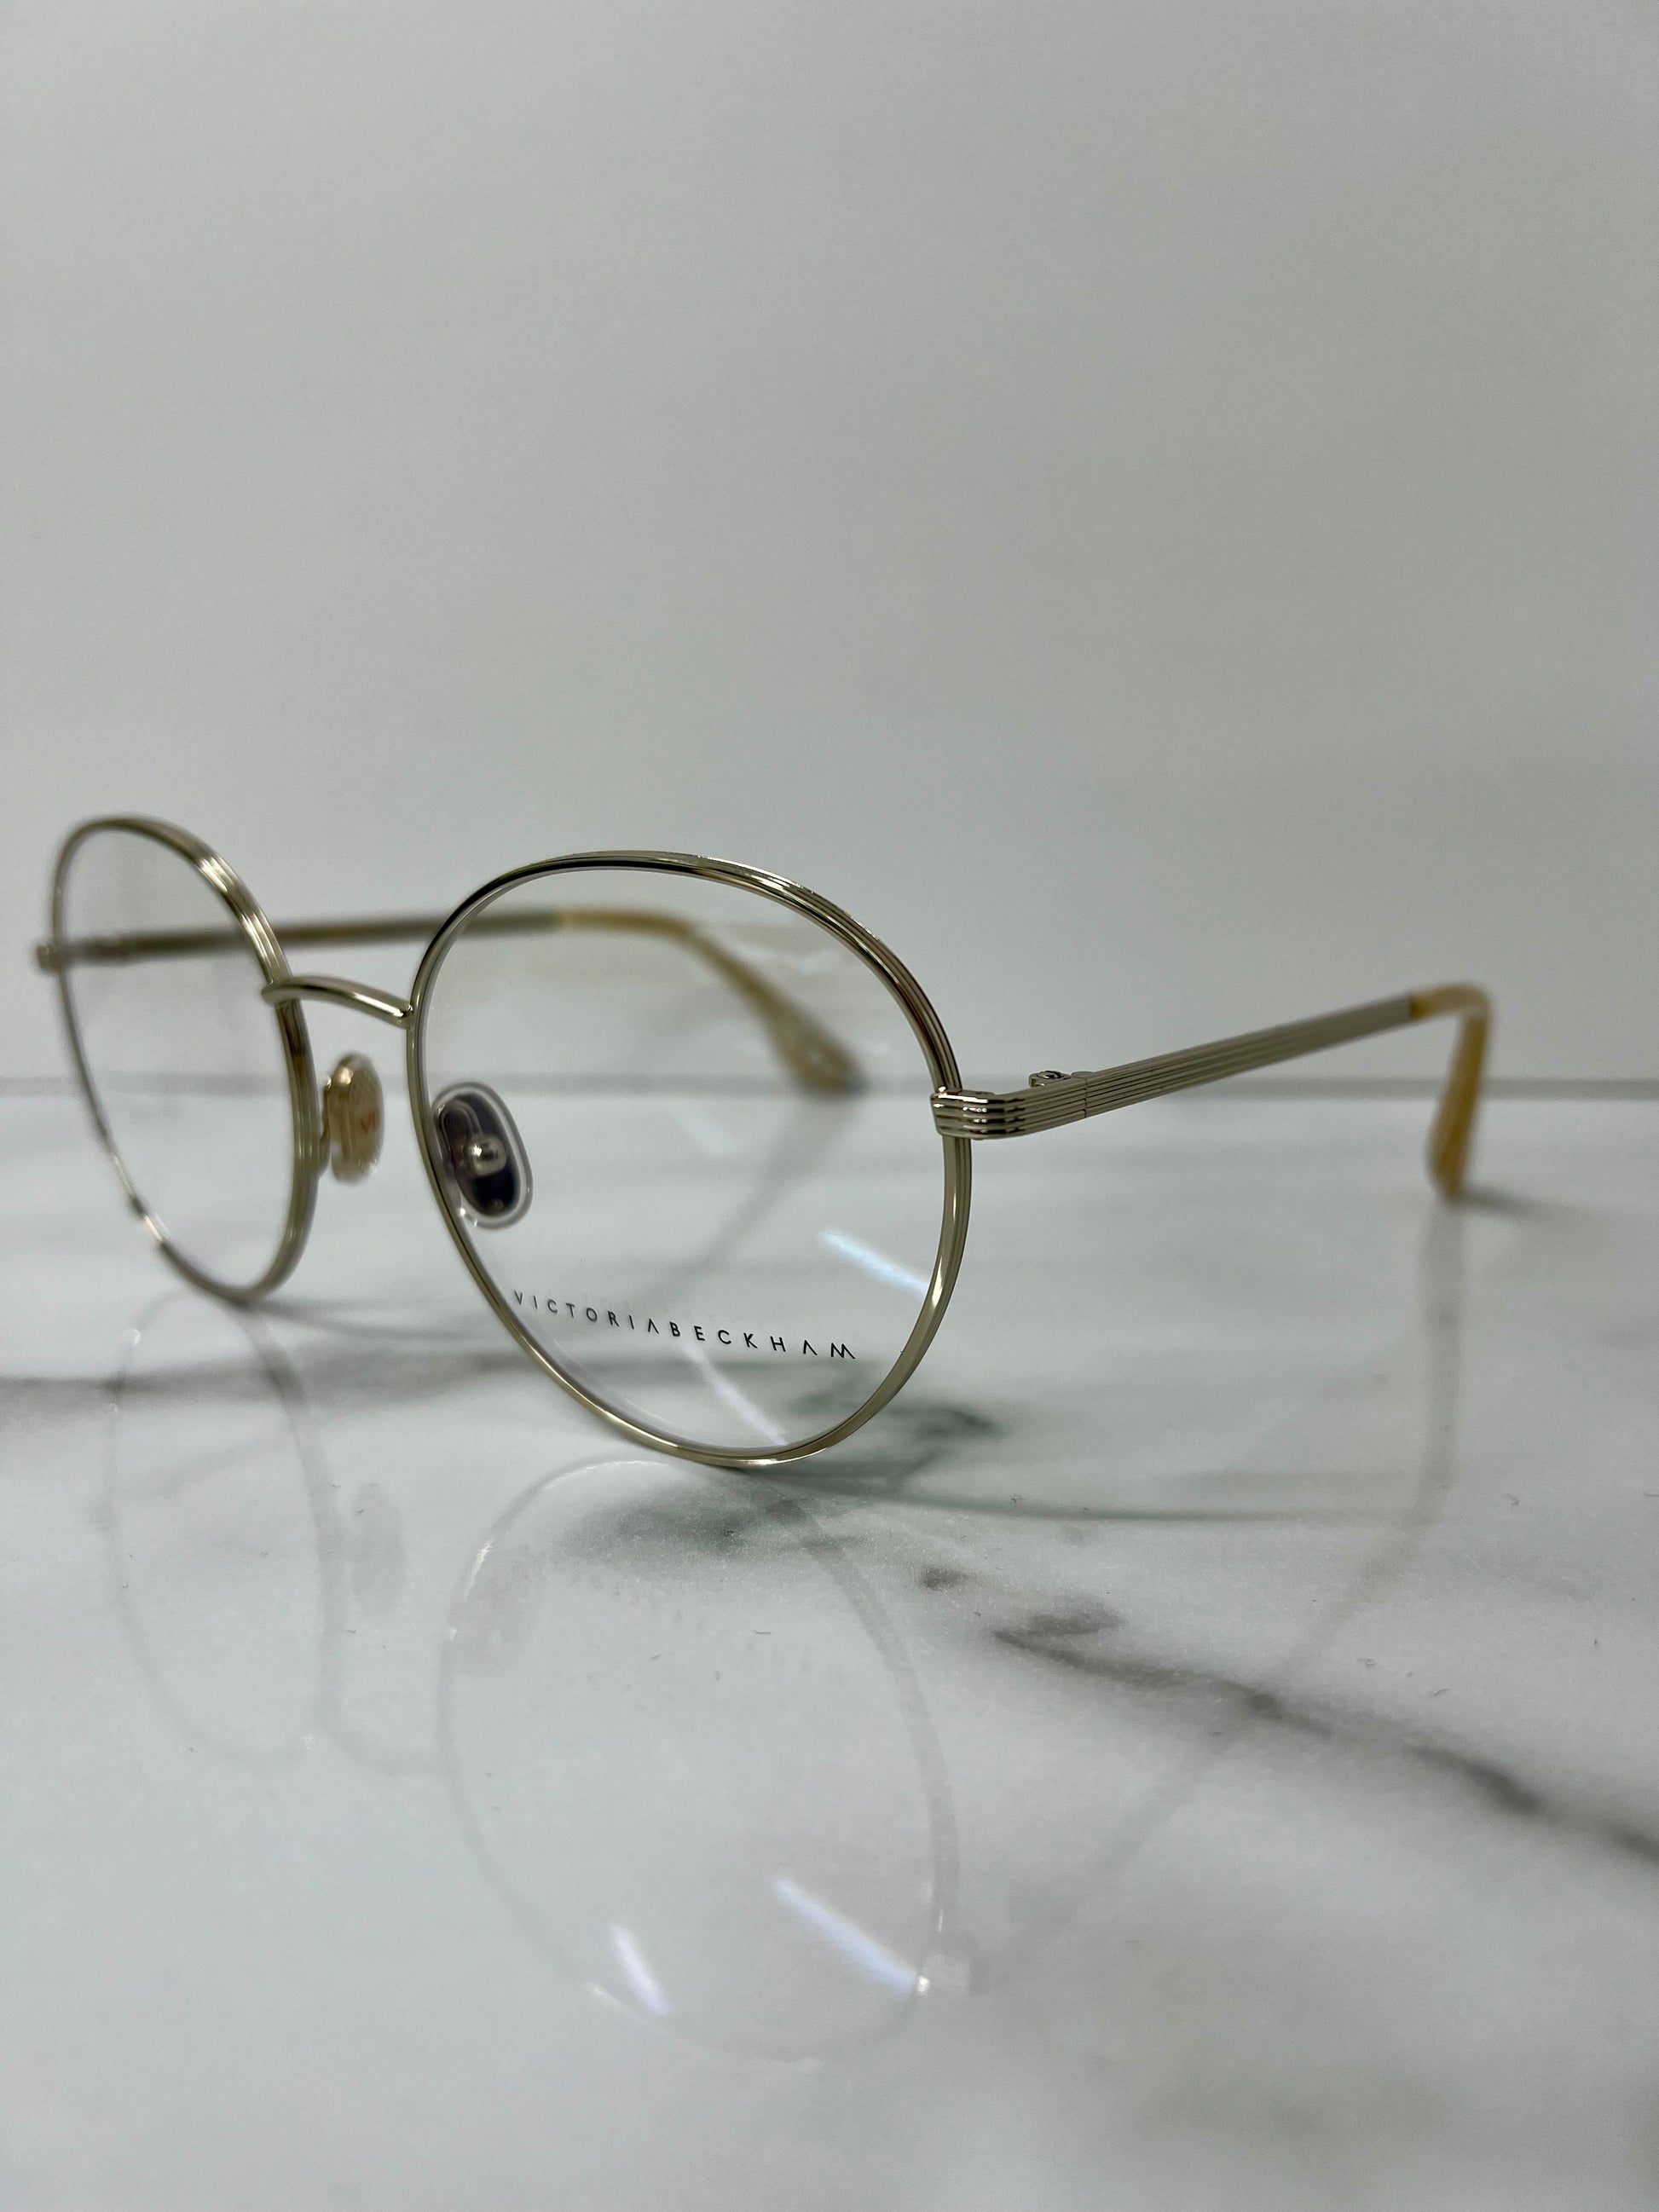 Victoria Beckham Glasses Frames Optical Silver Pearl Eyeglasses VB229